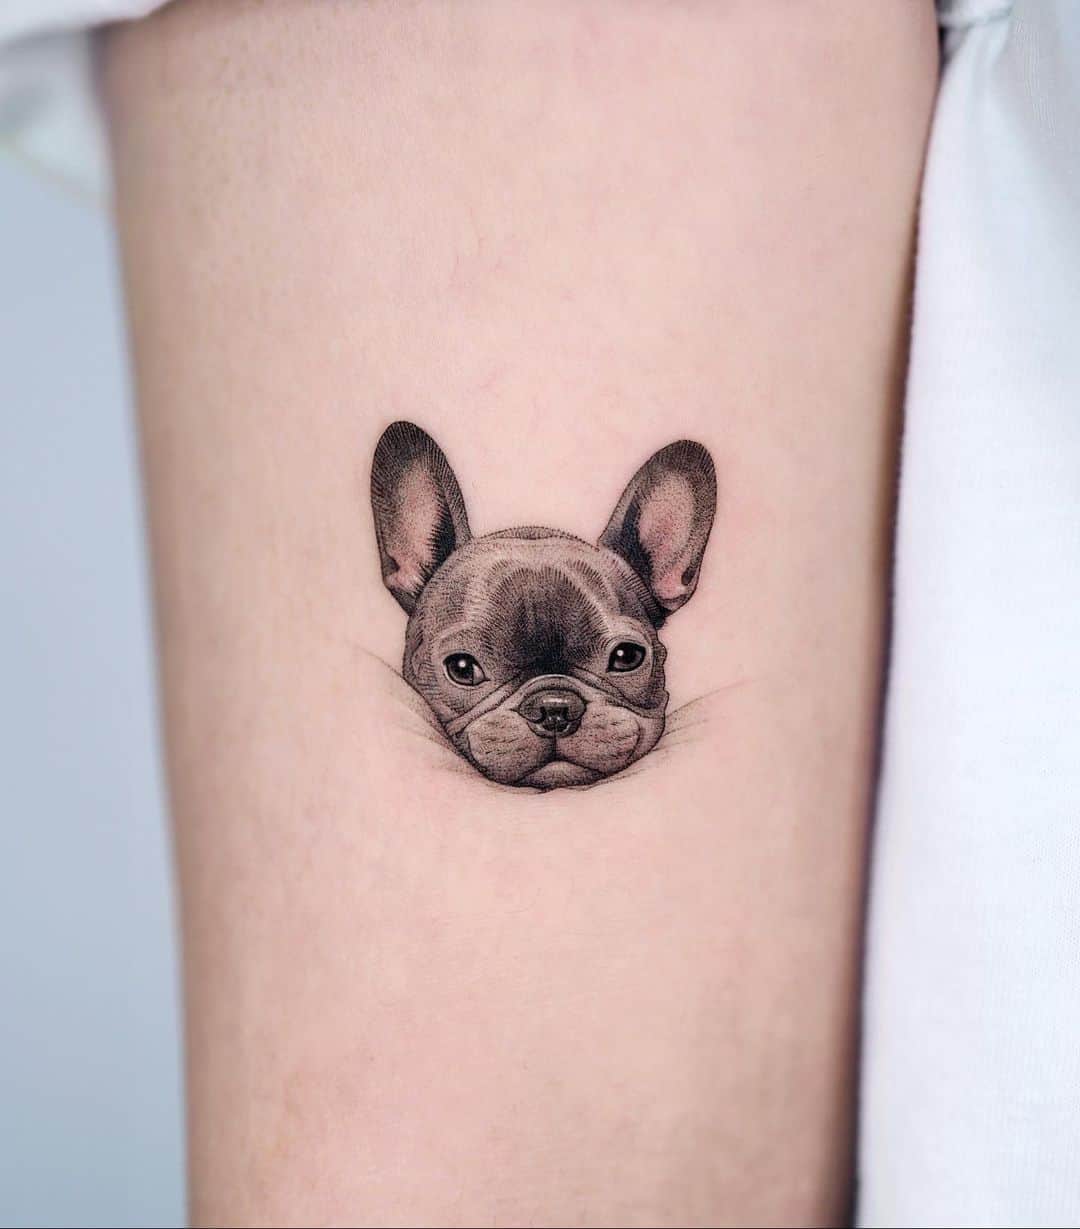 solyafemaleartist_tattoo - #dog #dogtattoo #ilovedog #bulldog  #frenchbulldog #frenchbulldogtattoo #tattoo #tattoos #tattooed #tattoogirl  #tattoogirls #tattooedgirl #tattooedgirls #ink #inked #inkedgirl  #inkedgirls #minimaltattoo #minimal | Facebook